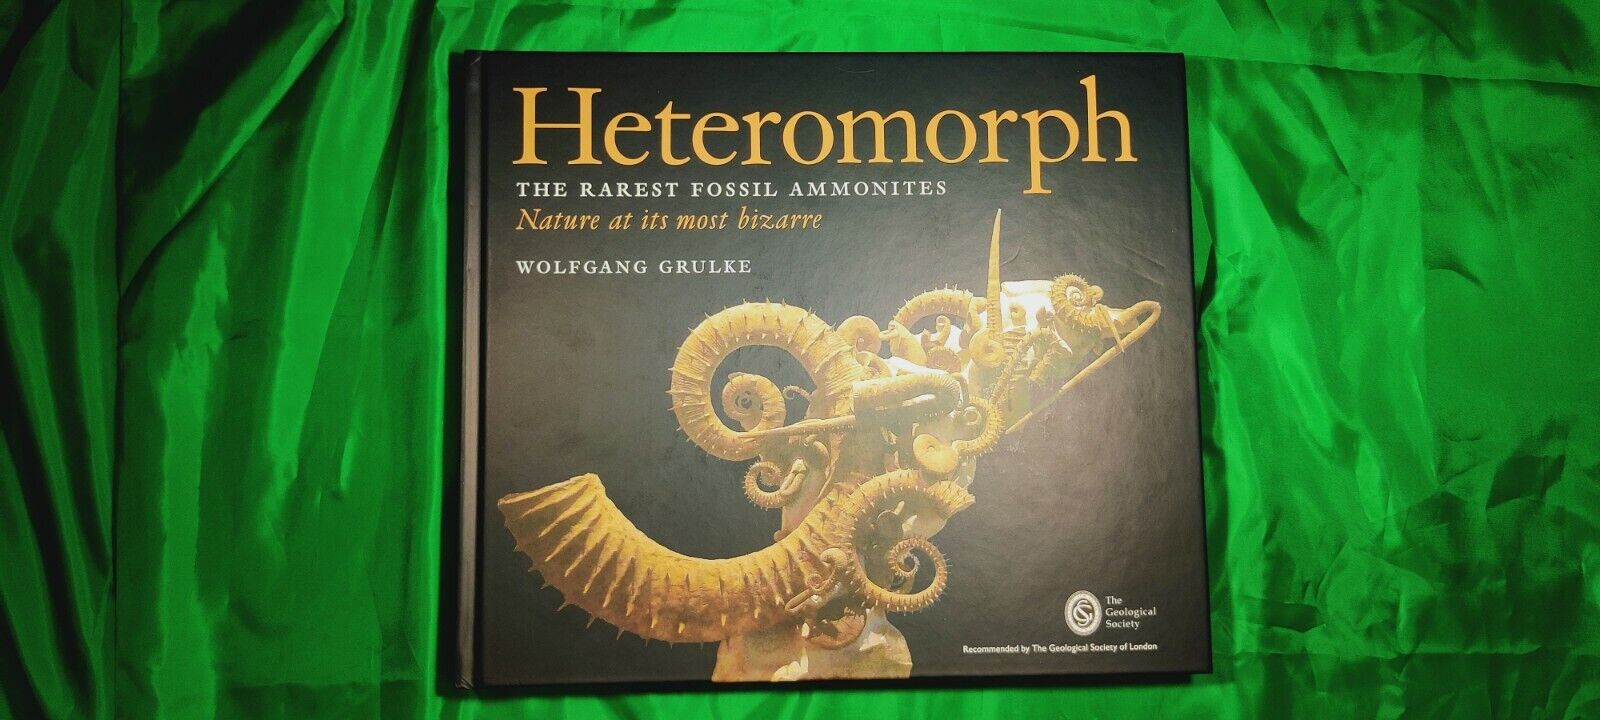 Heteromorph The Rarest Fossil Ammonites book by Wolfgang Grulke